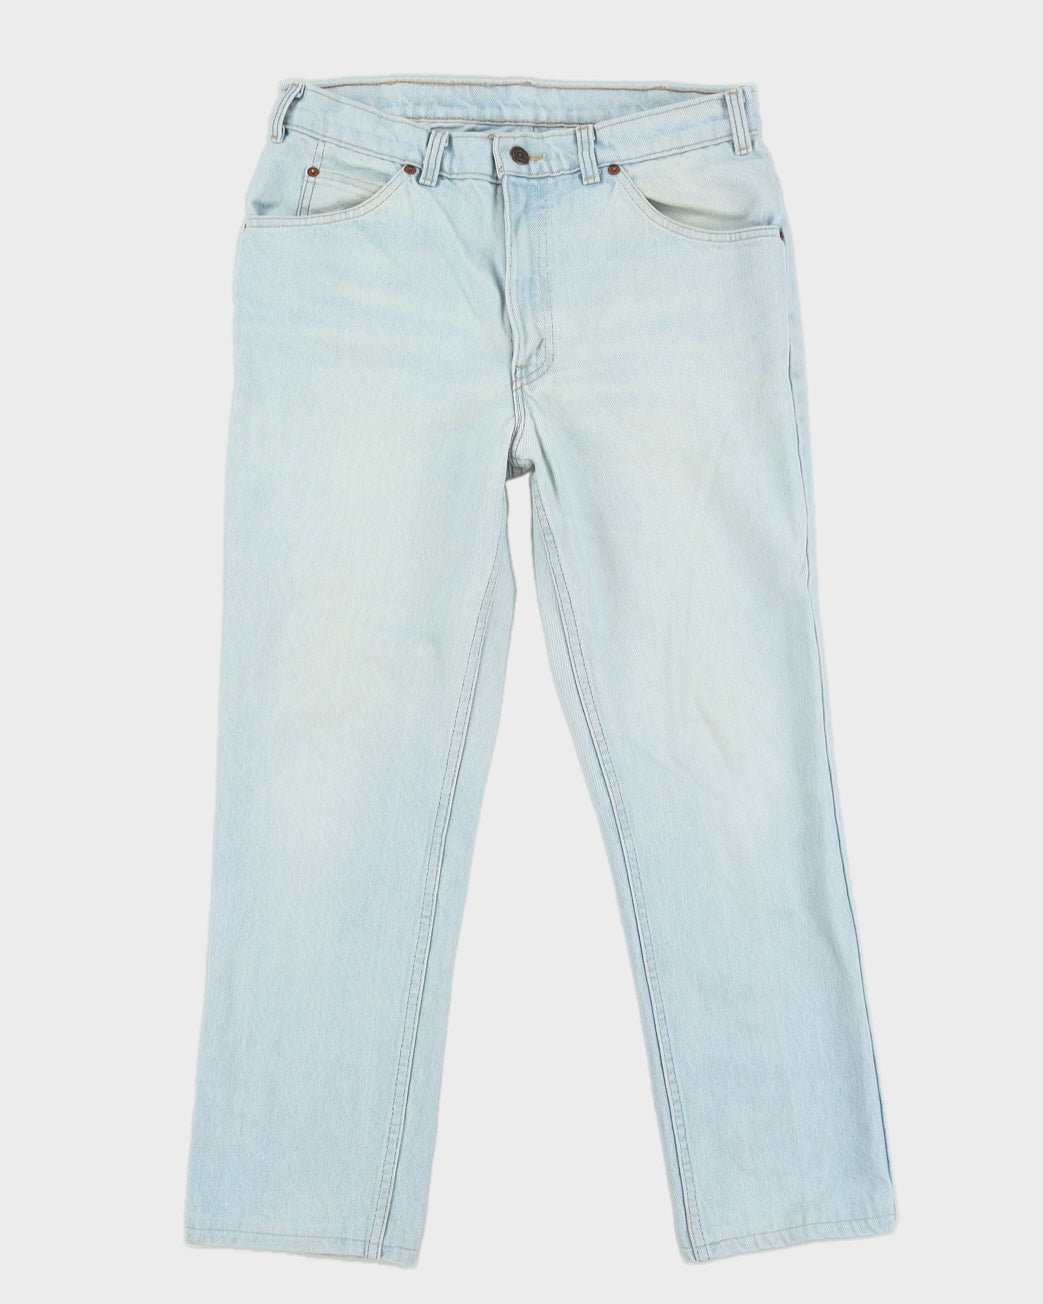 Vintage 80s Levi's Light Washed Orange Tab Blue Jeans - W32 L27